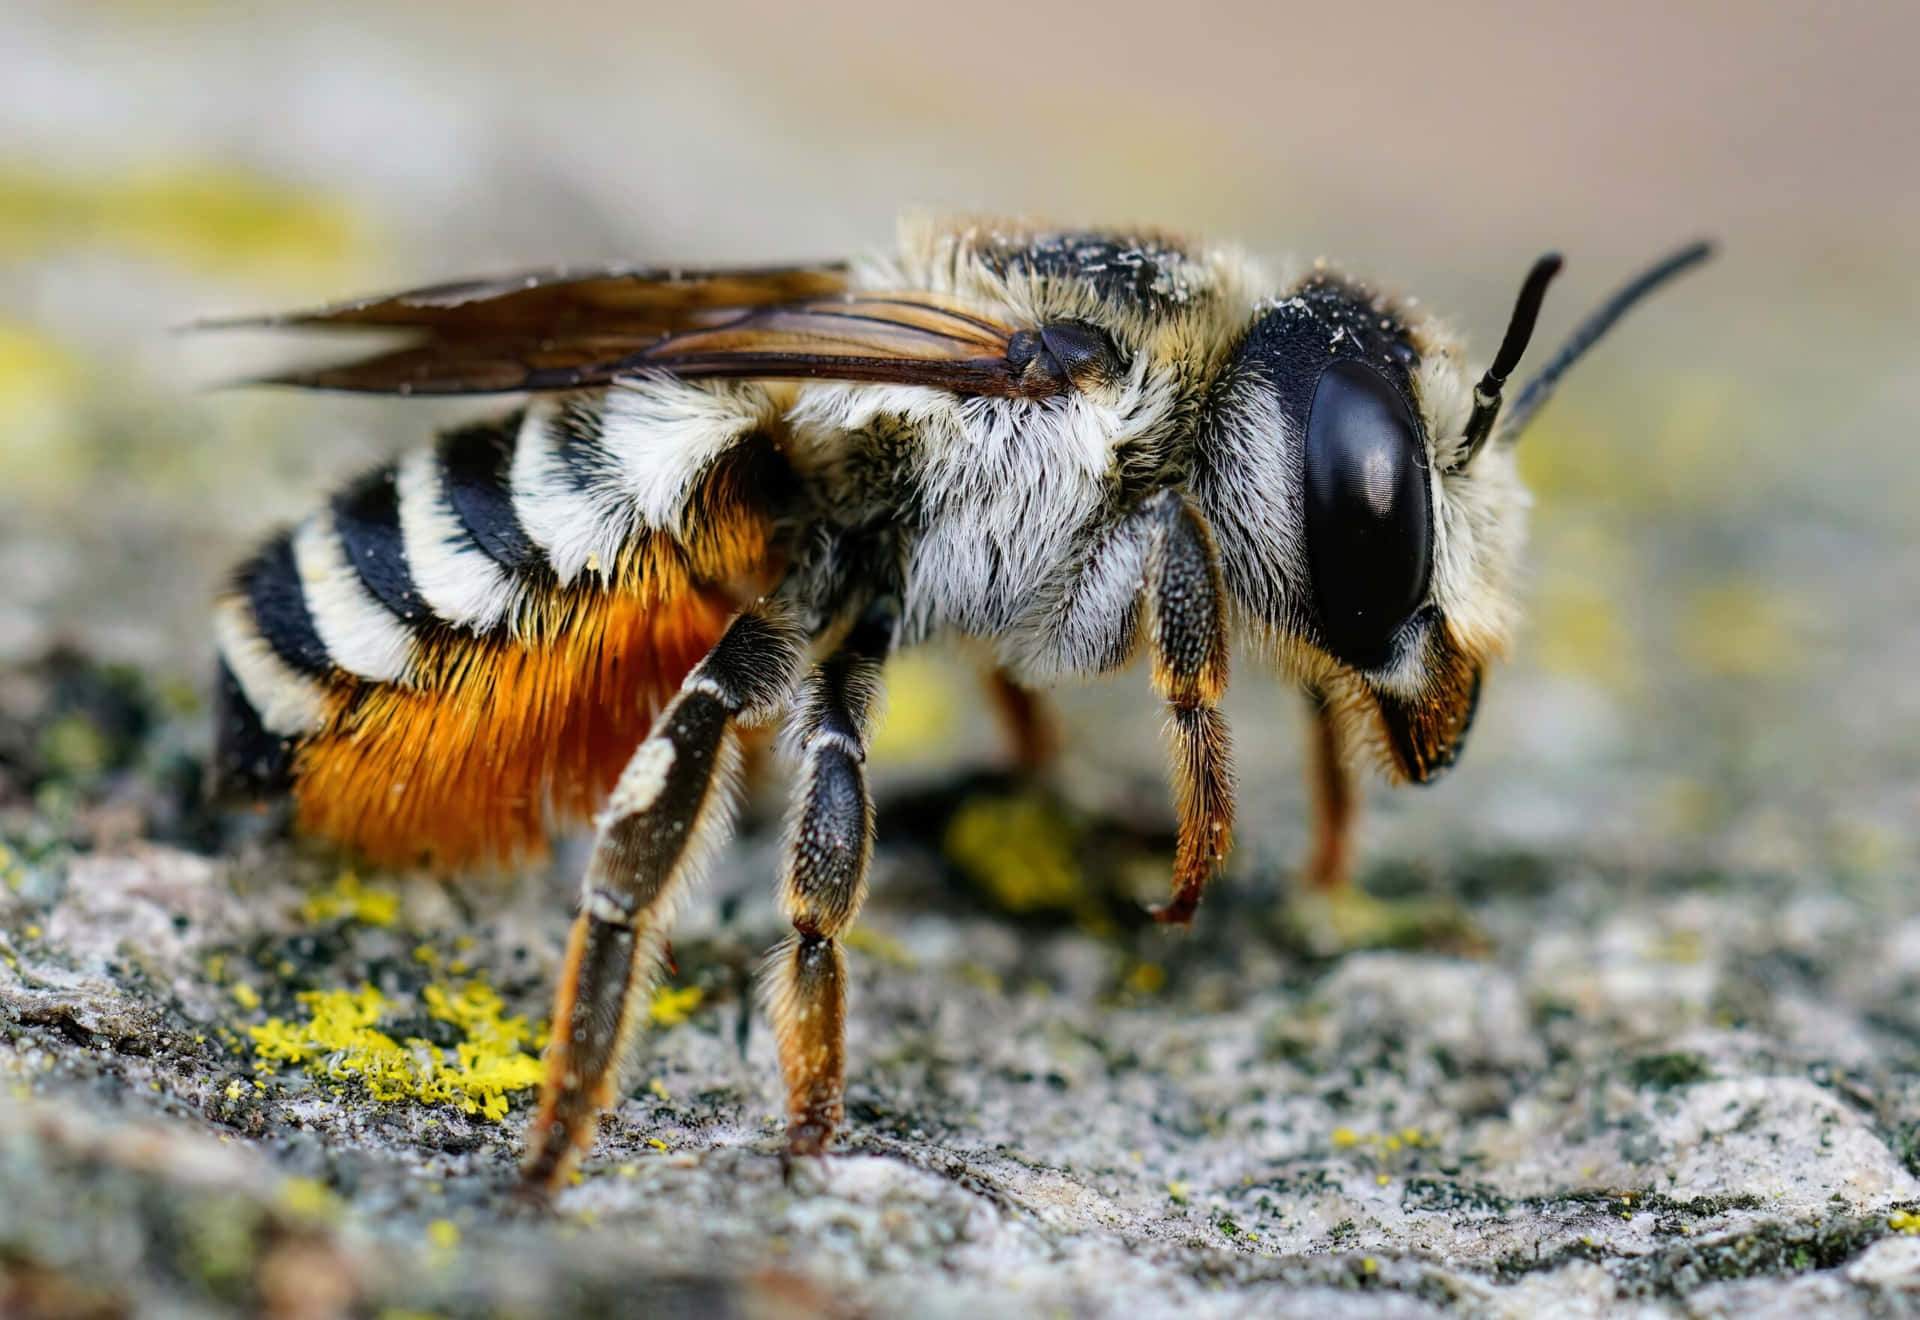 Solitary Bee Closeupon Rock Wallpaper